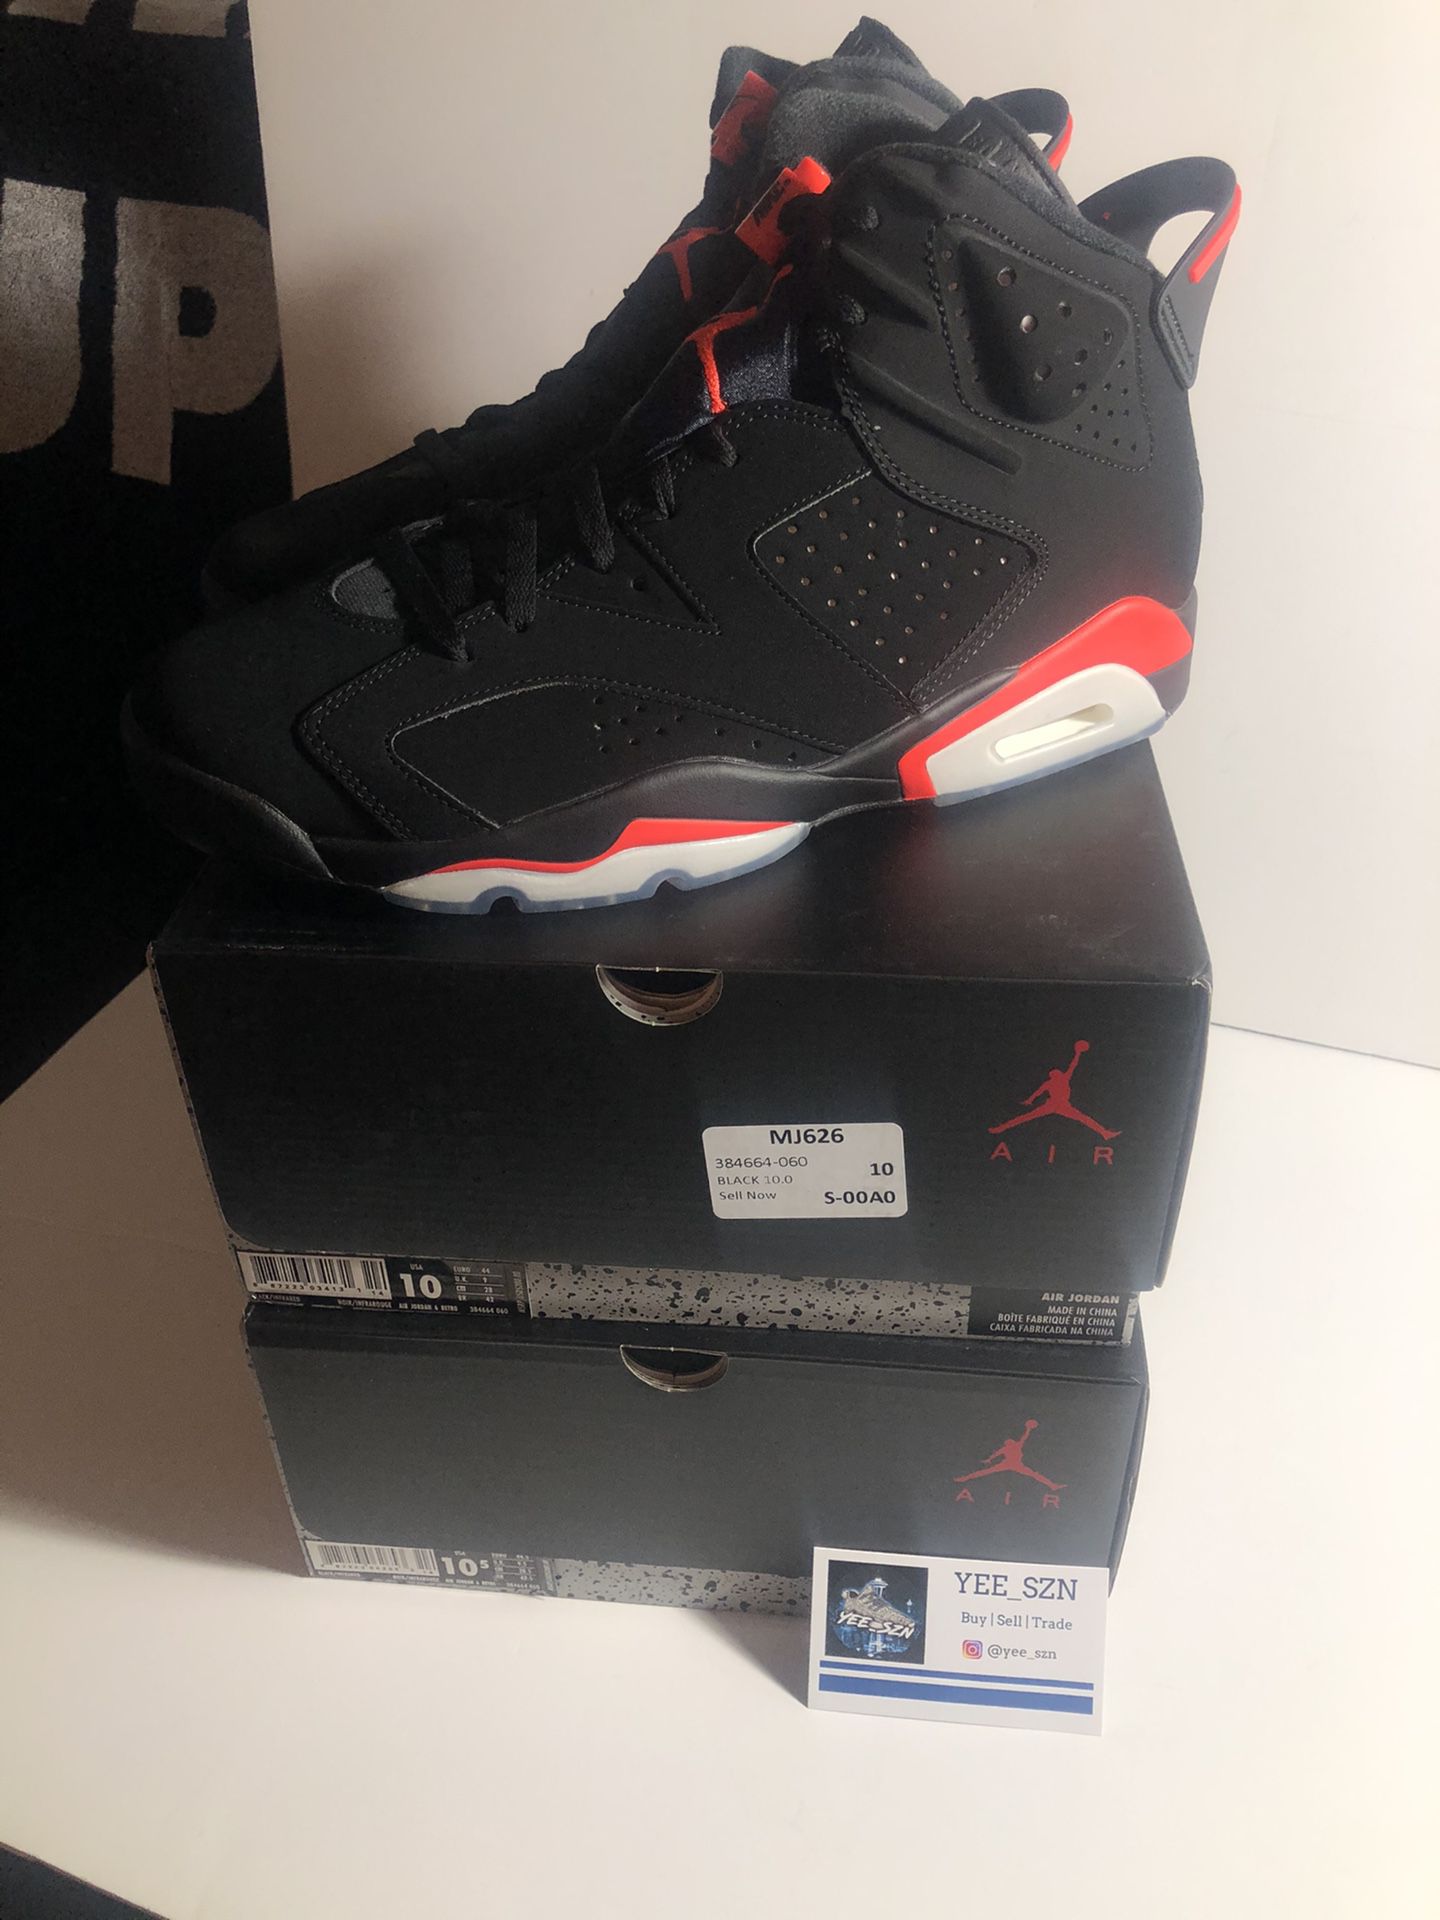 Nike air Jordan infrared 6 size 8 8.5 10 10.5 $320